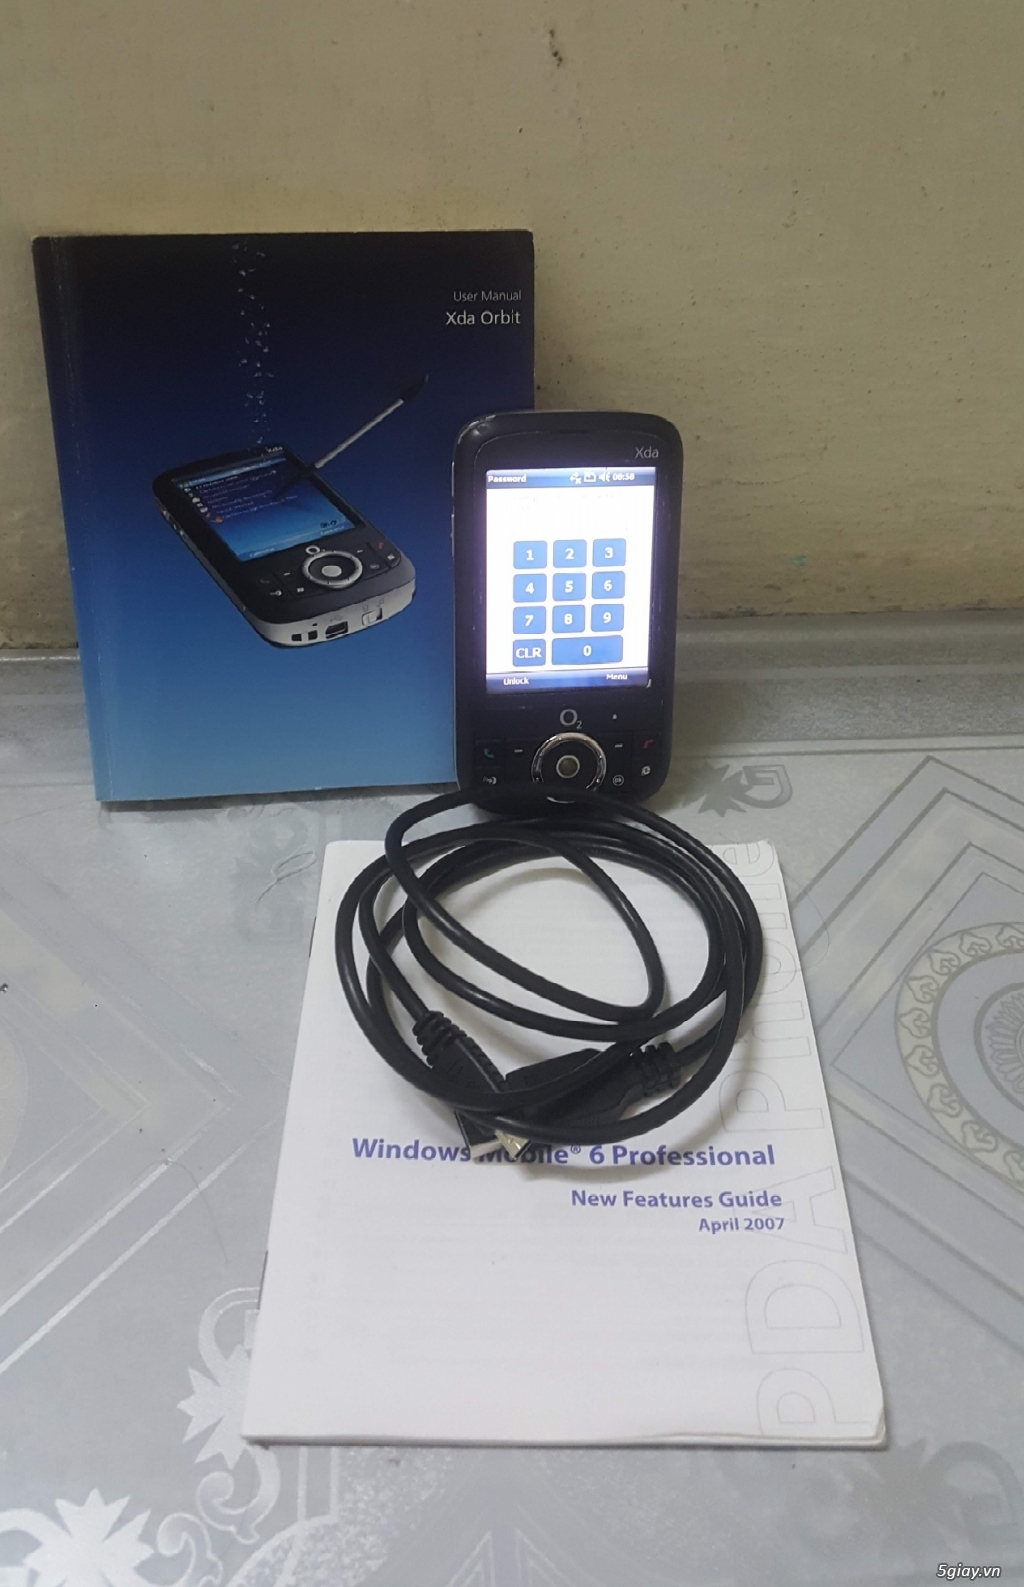 O2 Exec, O2 Orbit, HTC HD mini, Nokia N900